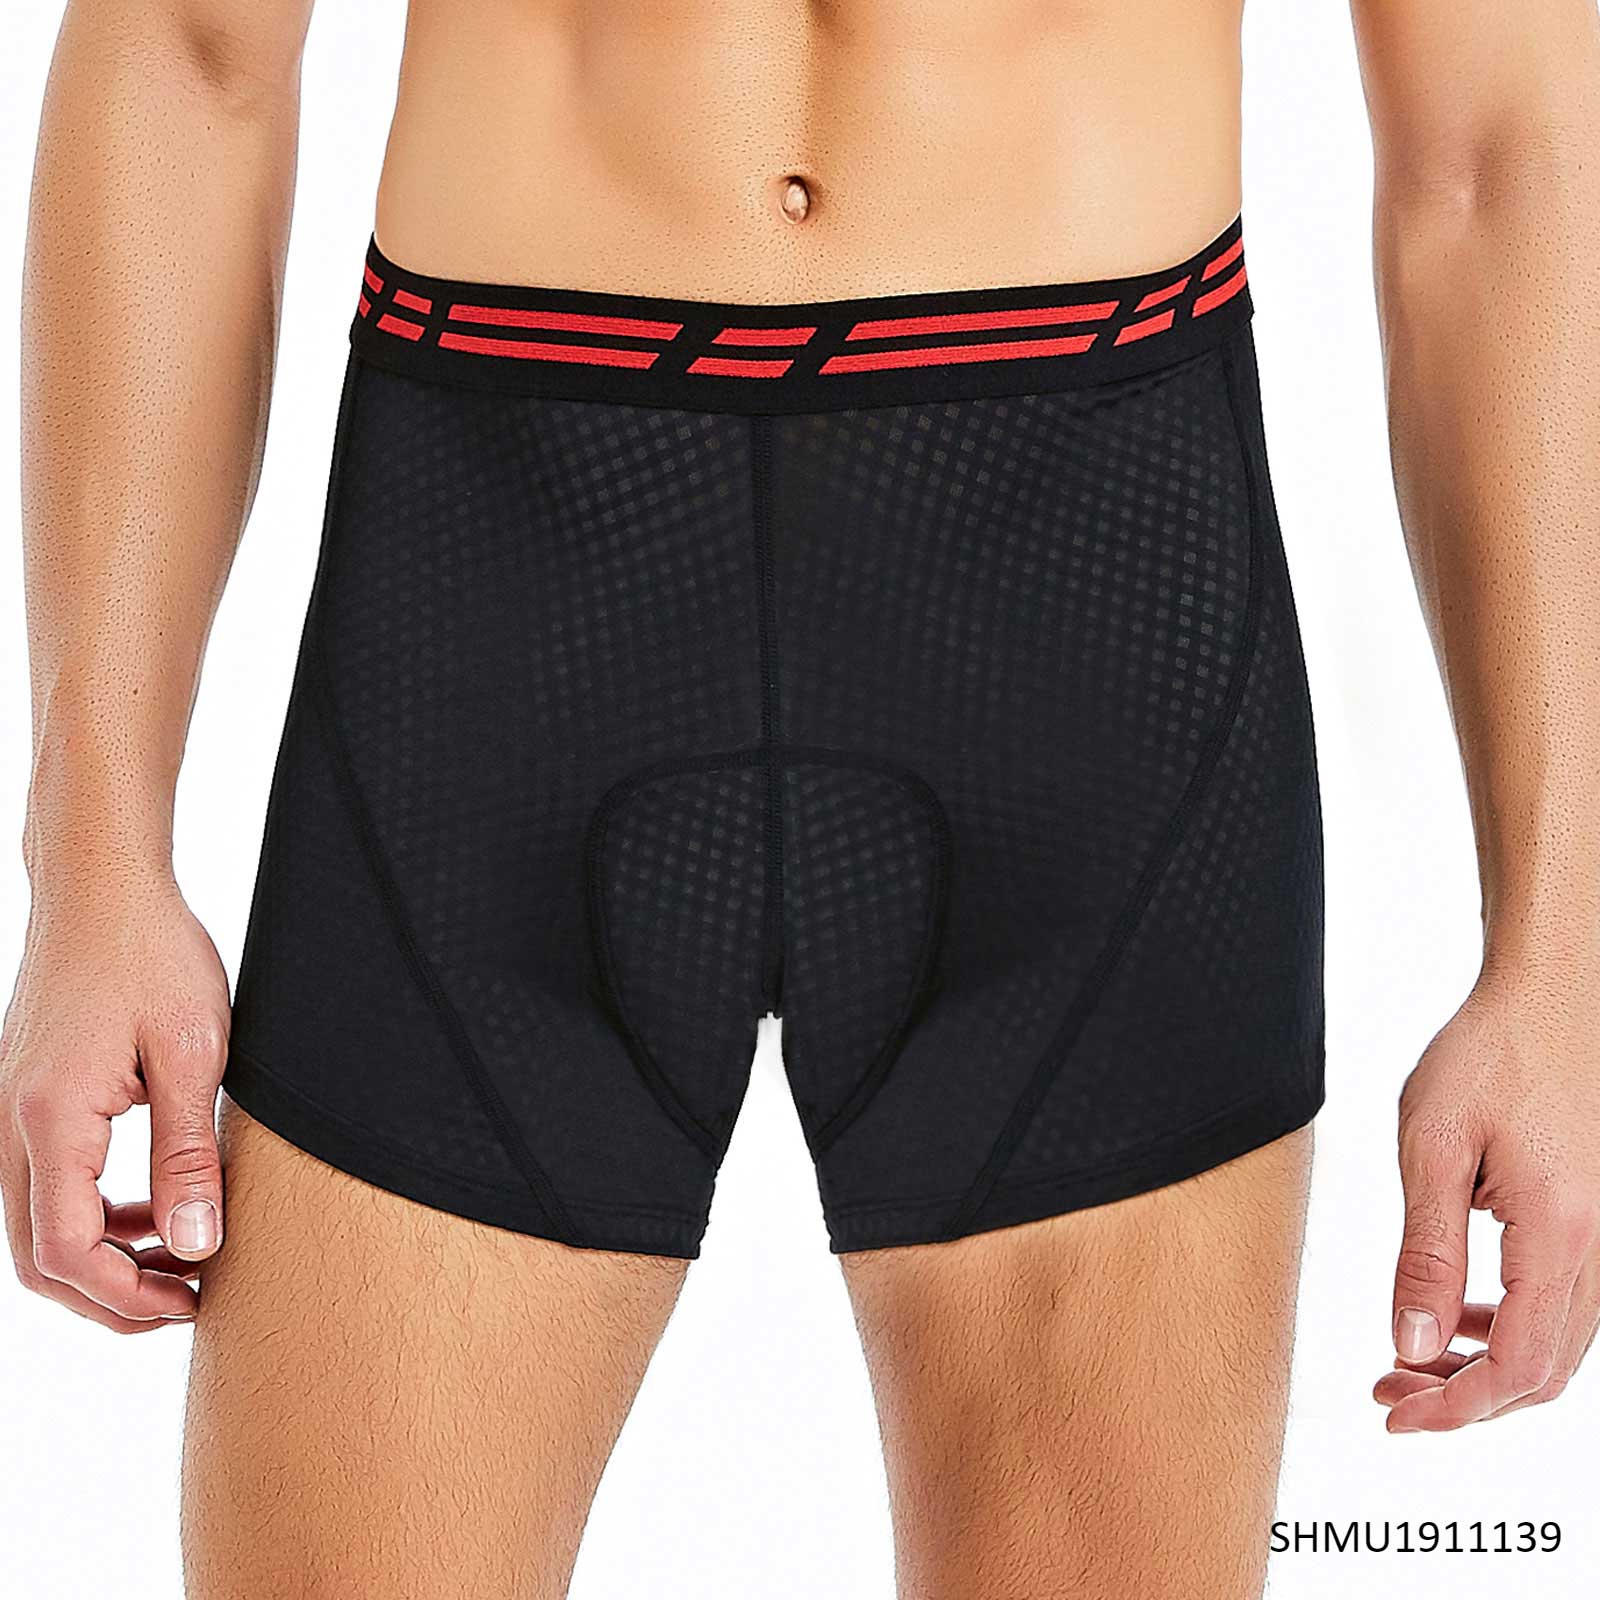 men's cycling underwear SHMU1911139